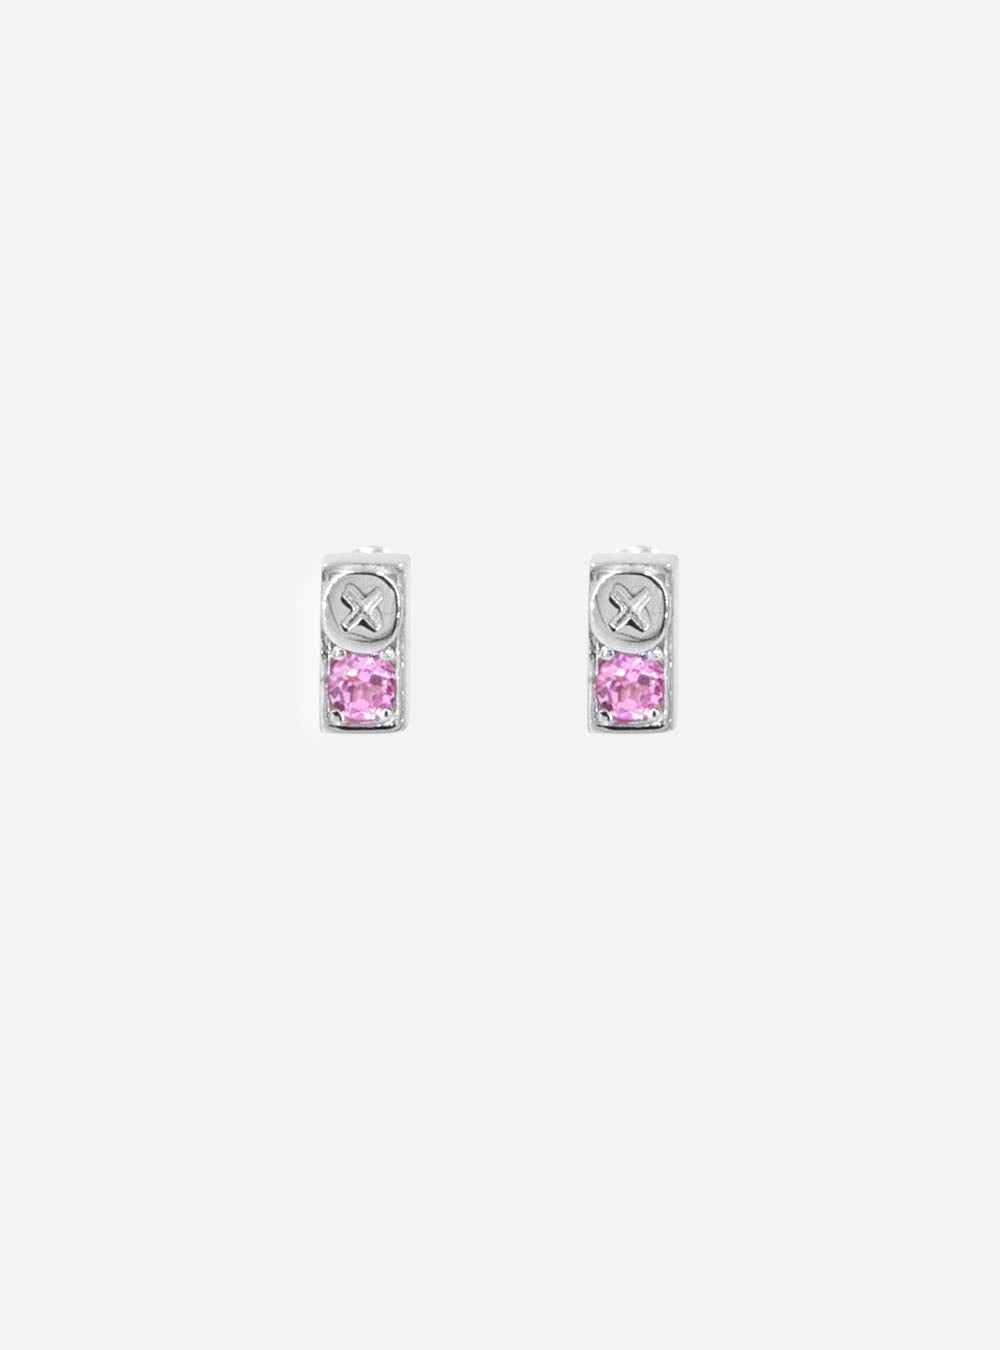 a pair of MIDNIGHTFACTORY pink sapphire Screwbox earrings.